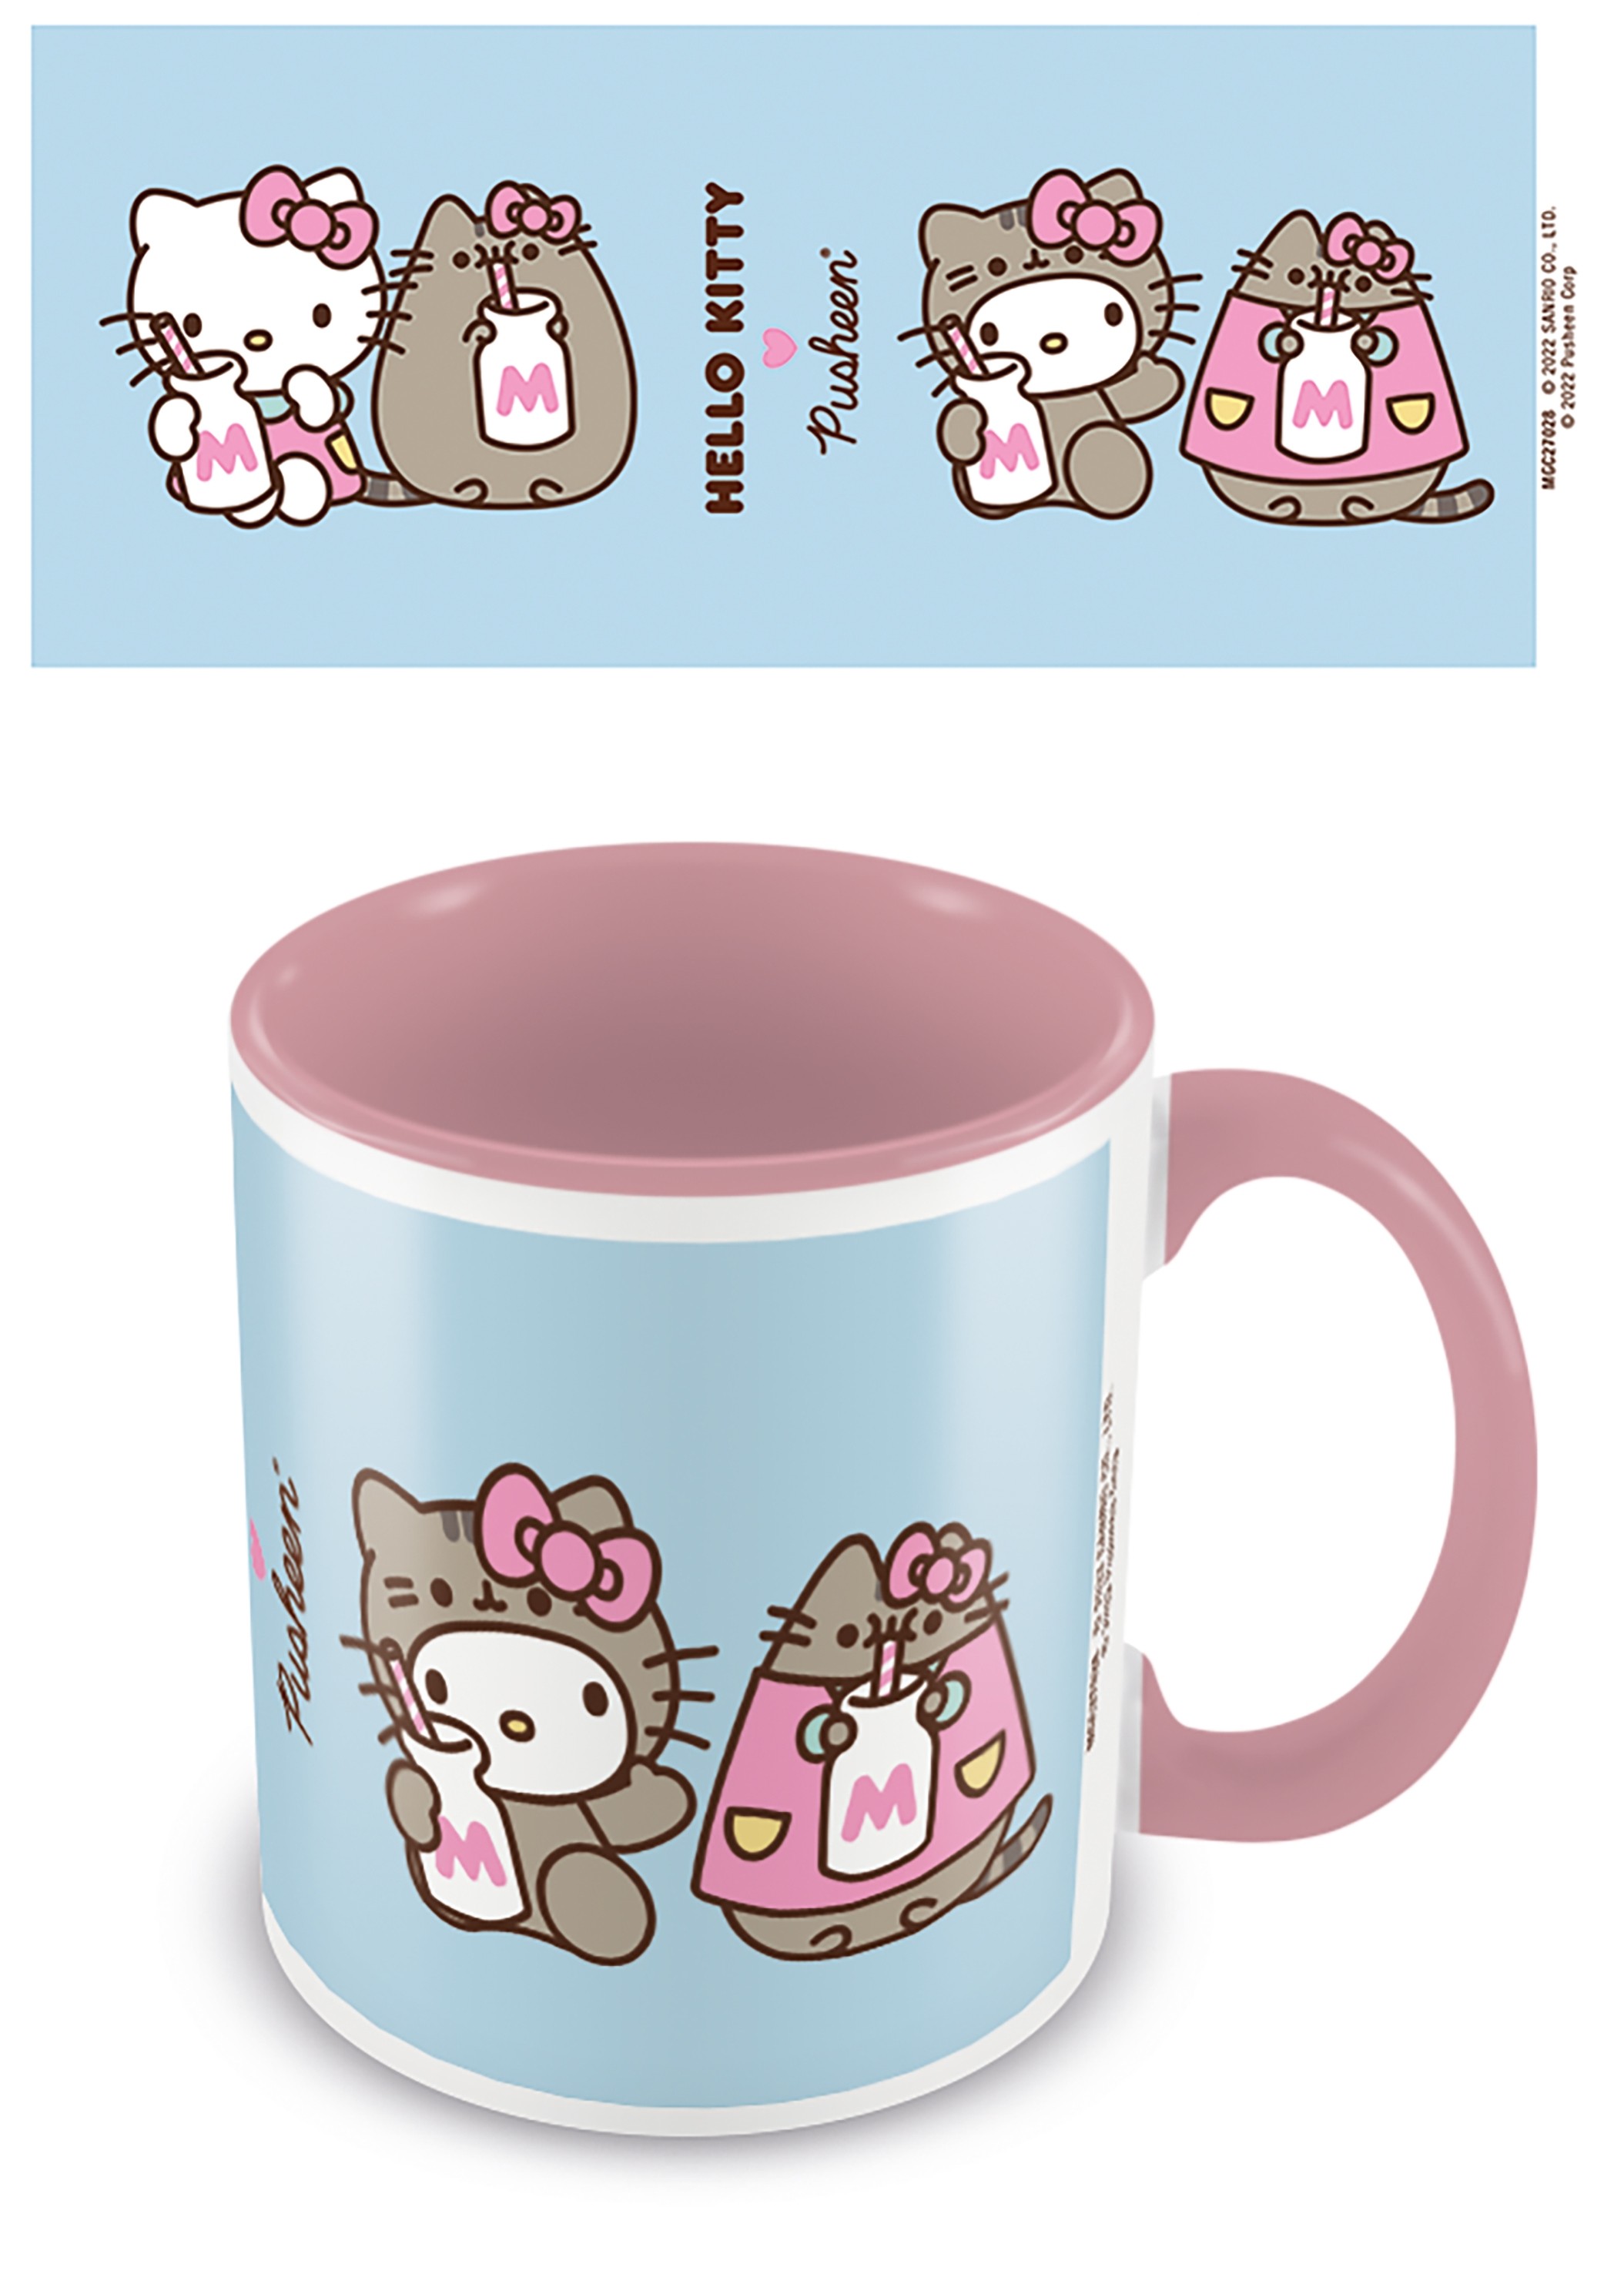 Pusheen x Hello Kitty - Mug - Glass of Milk - Pink